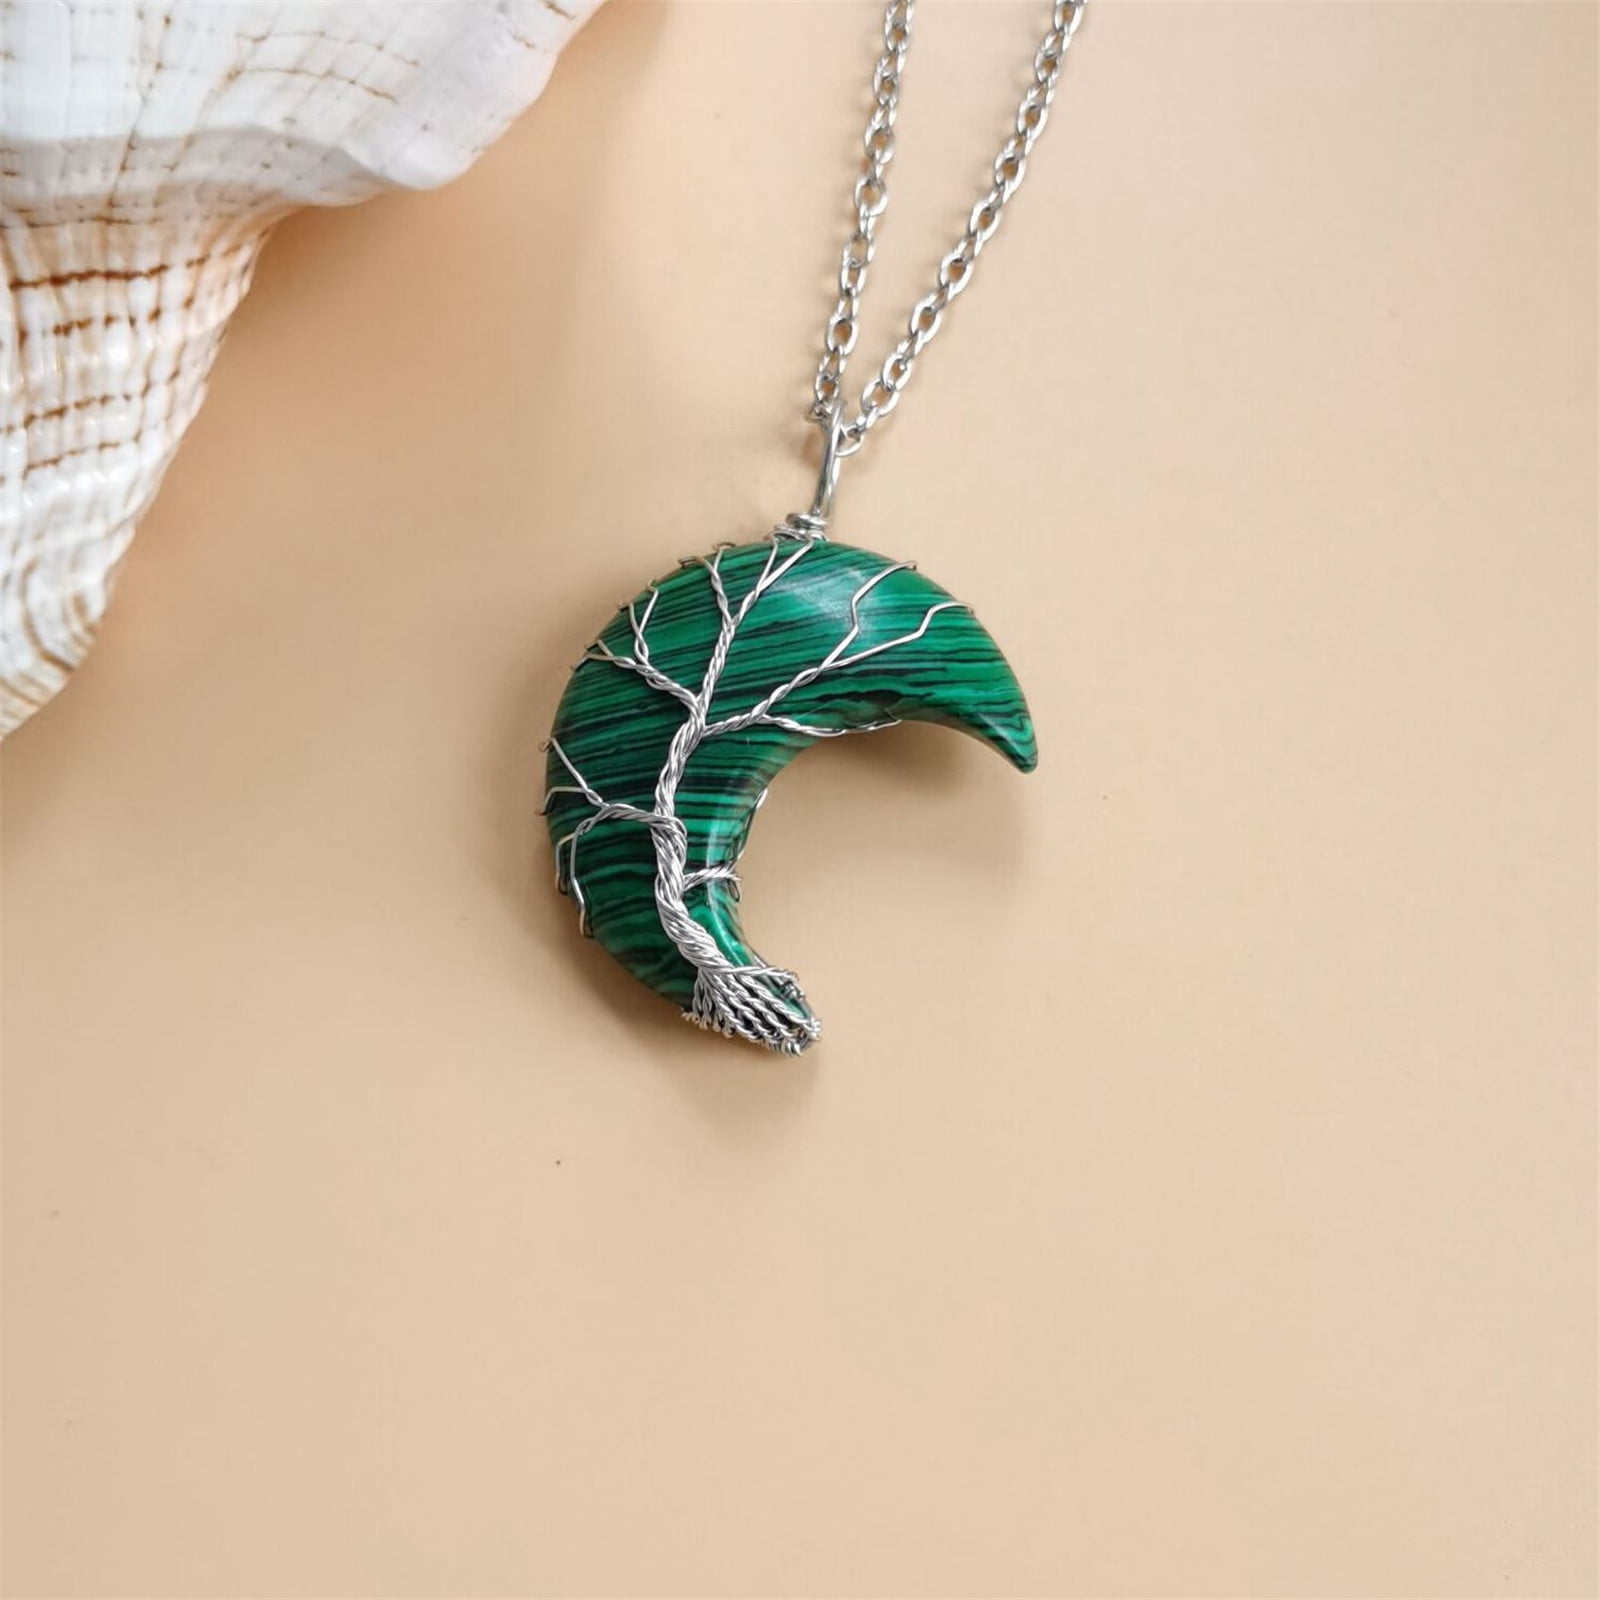 Chakra Healing Gemstone Tree of Life Charm Donut Pendant Chain Necklace Jewelry 